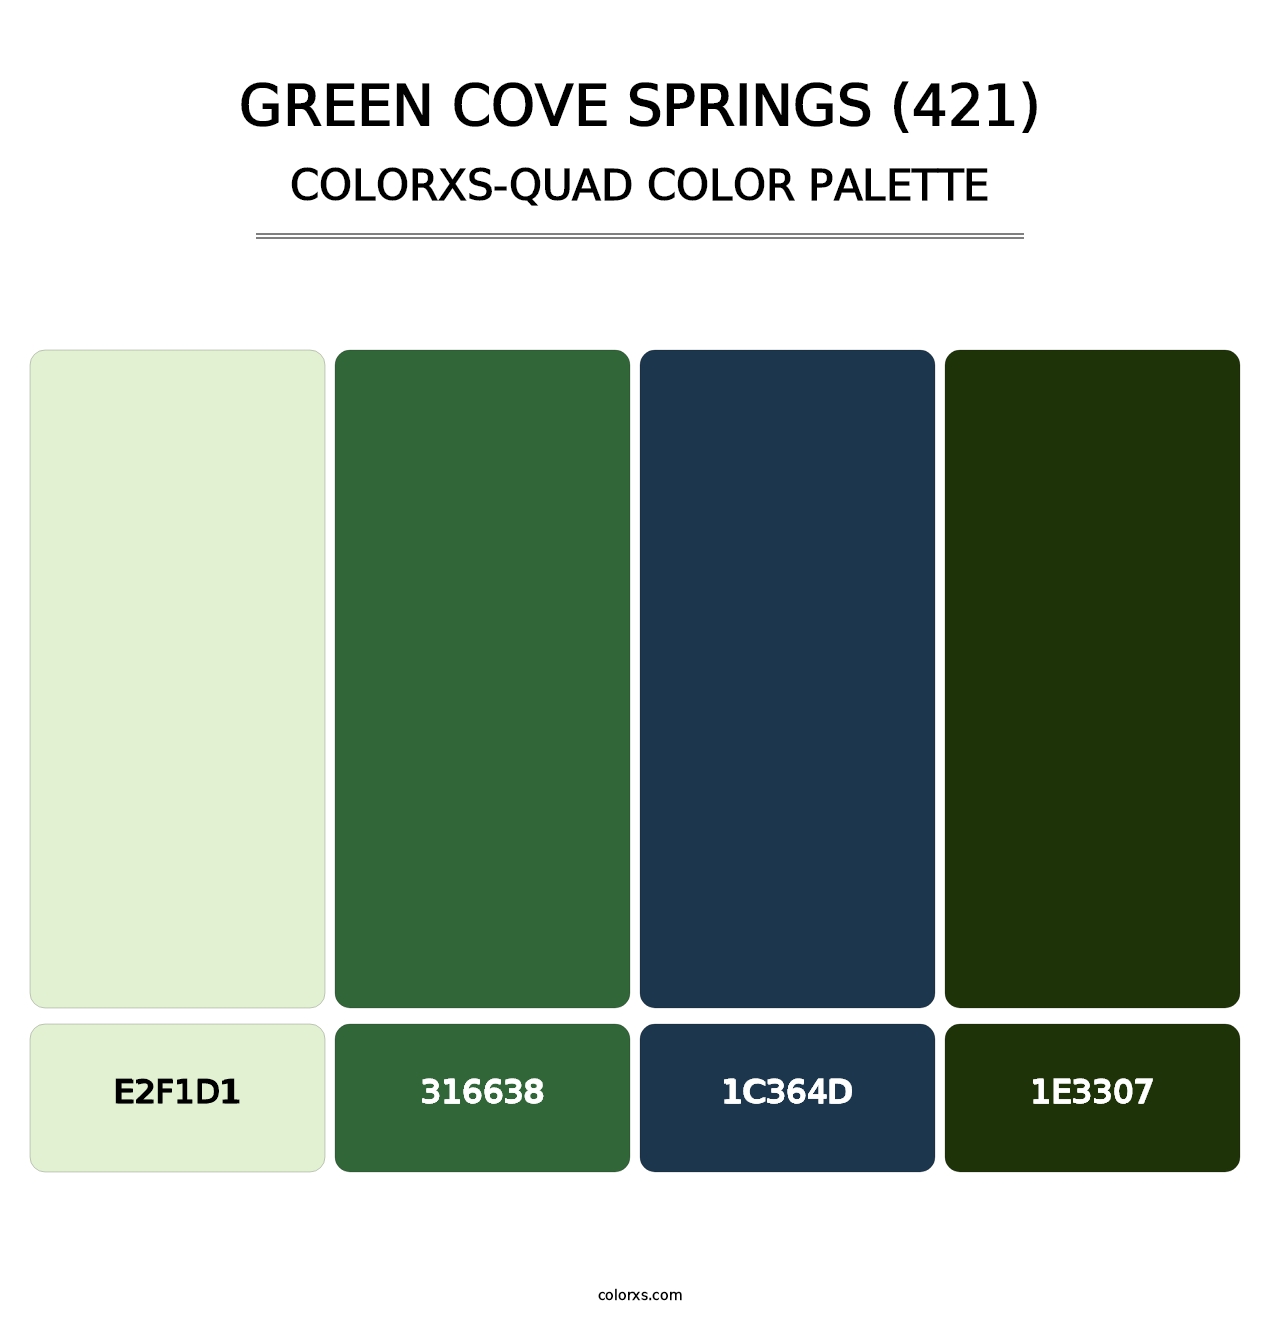 Green Cove Springs (421) - Colorxs Quad Palette